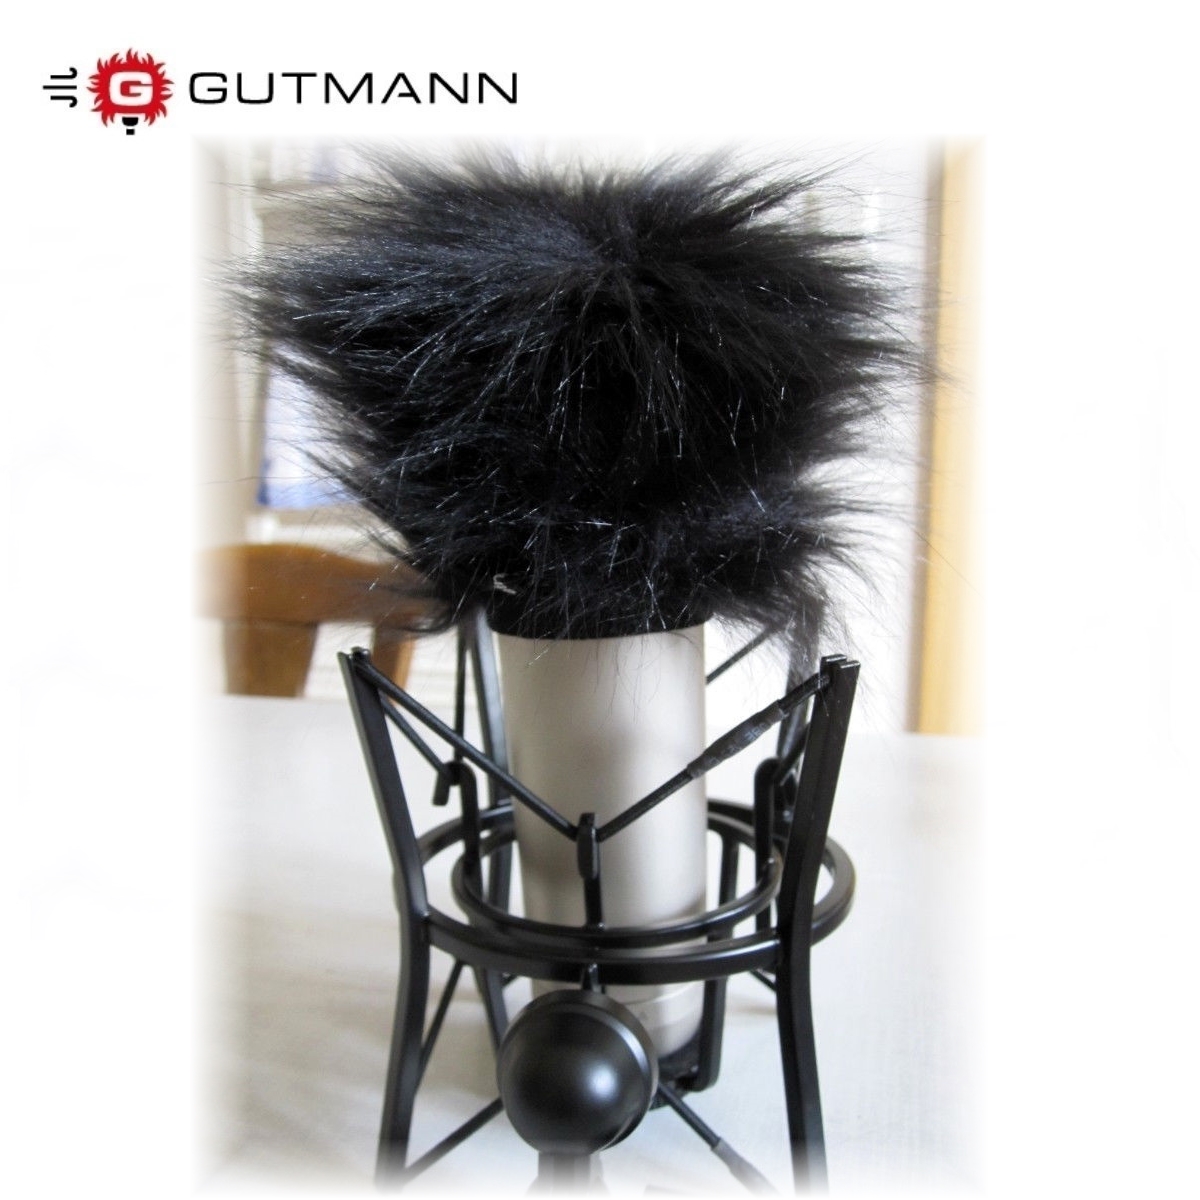 Gutmann Mikrofon Windschutz für Sennheiser SKM 3072-U 